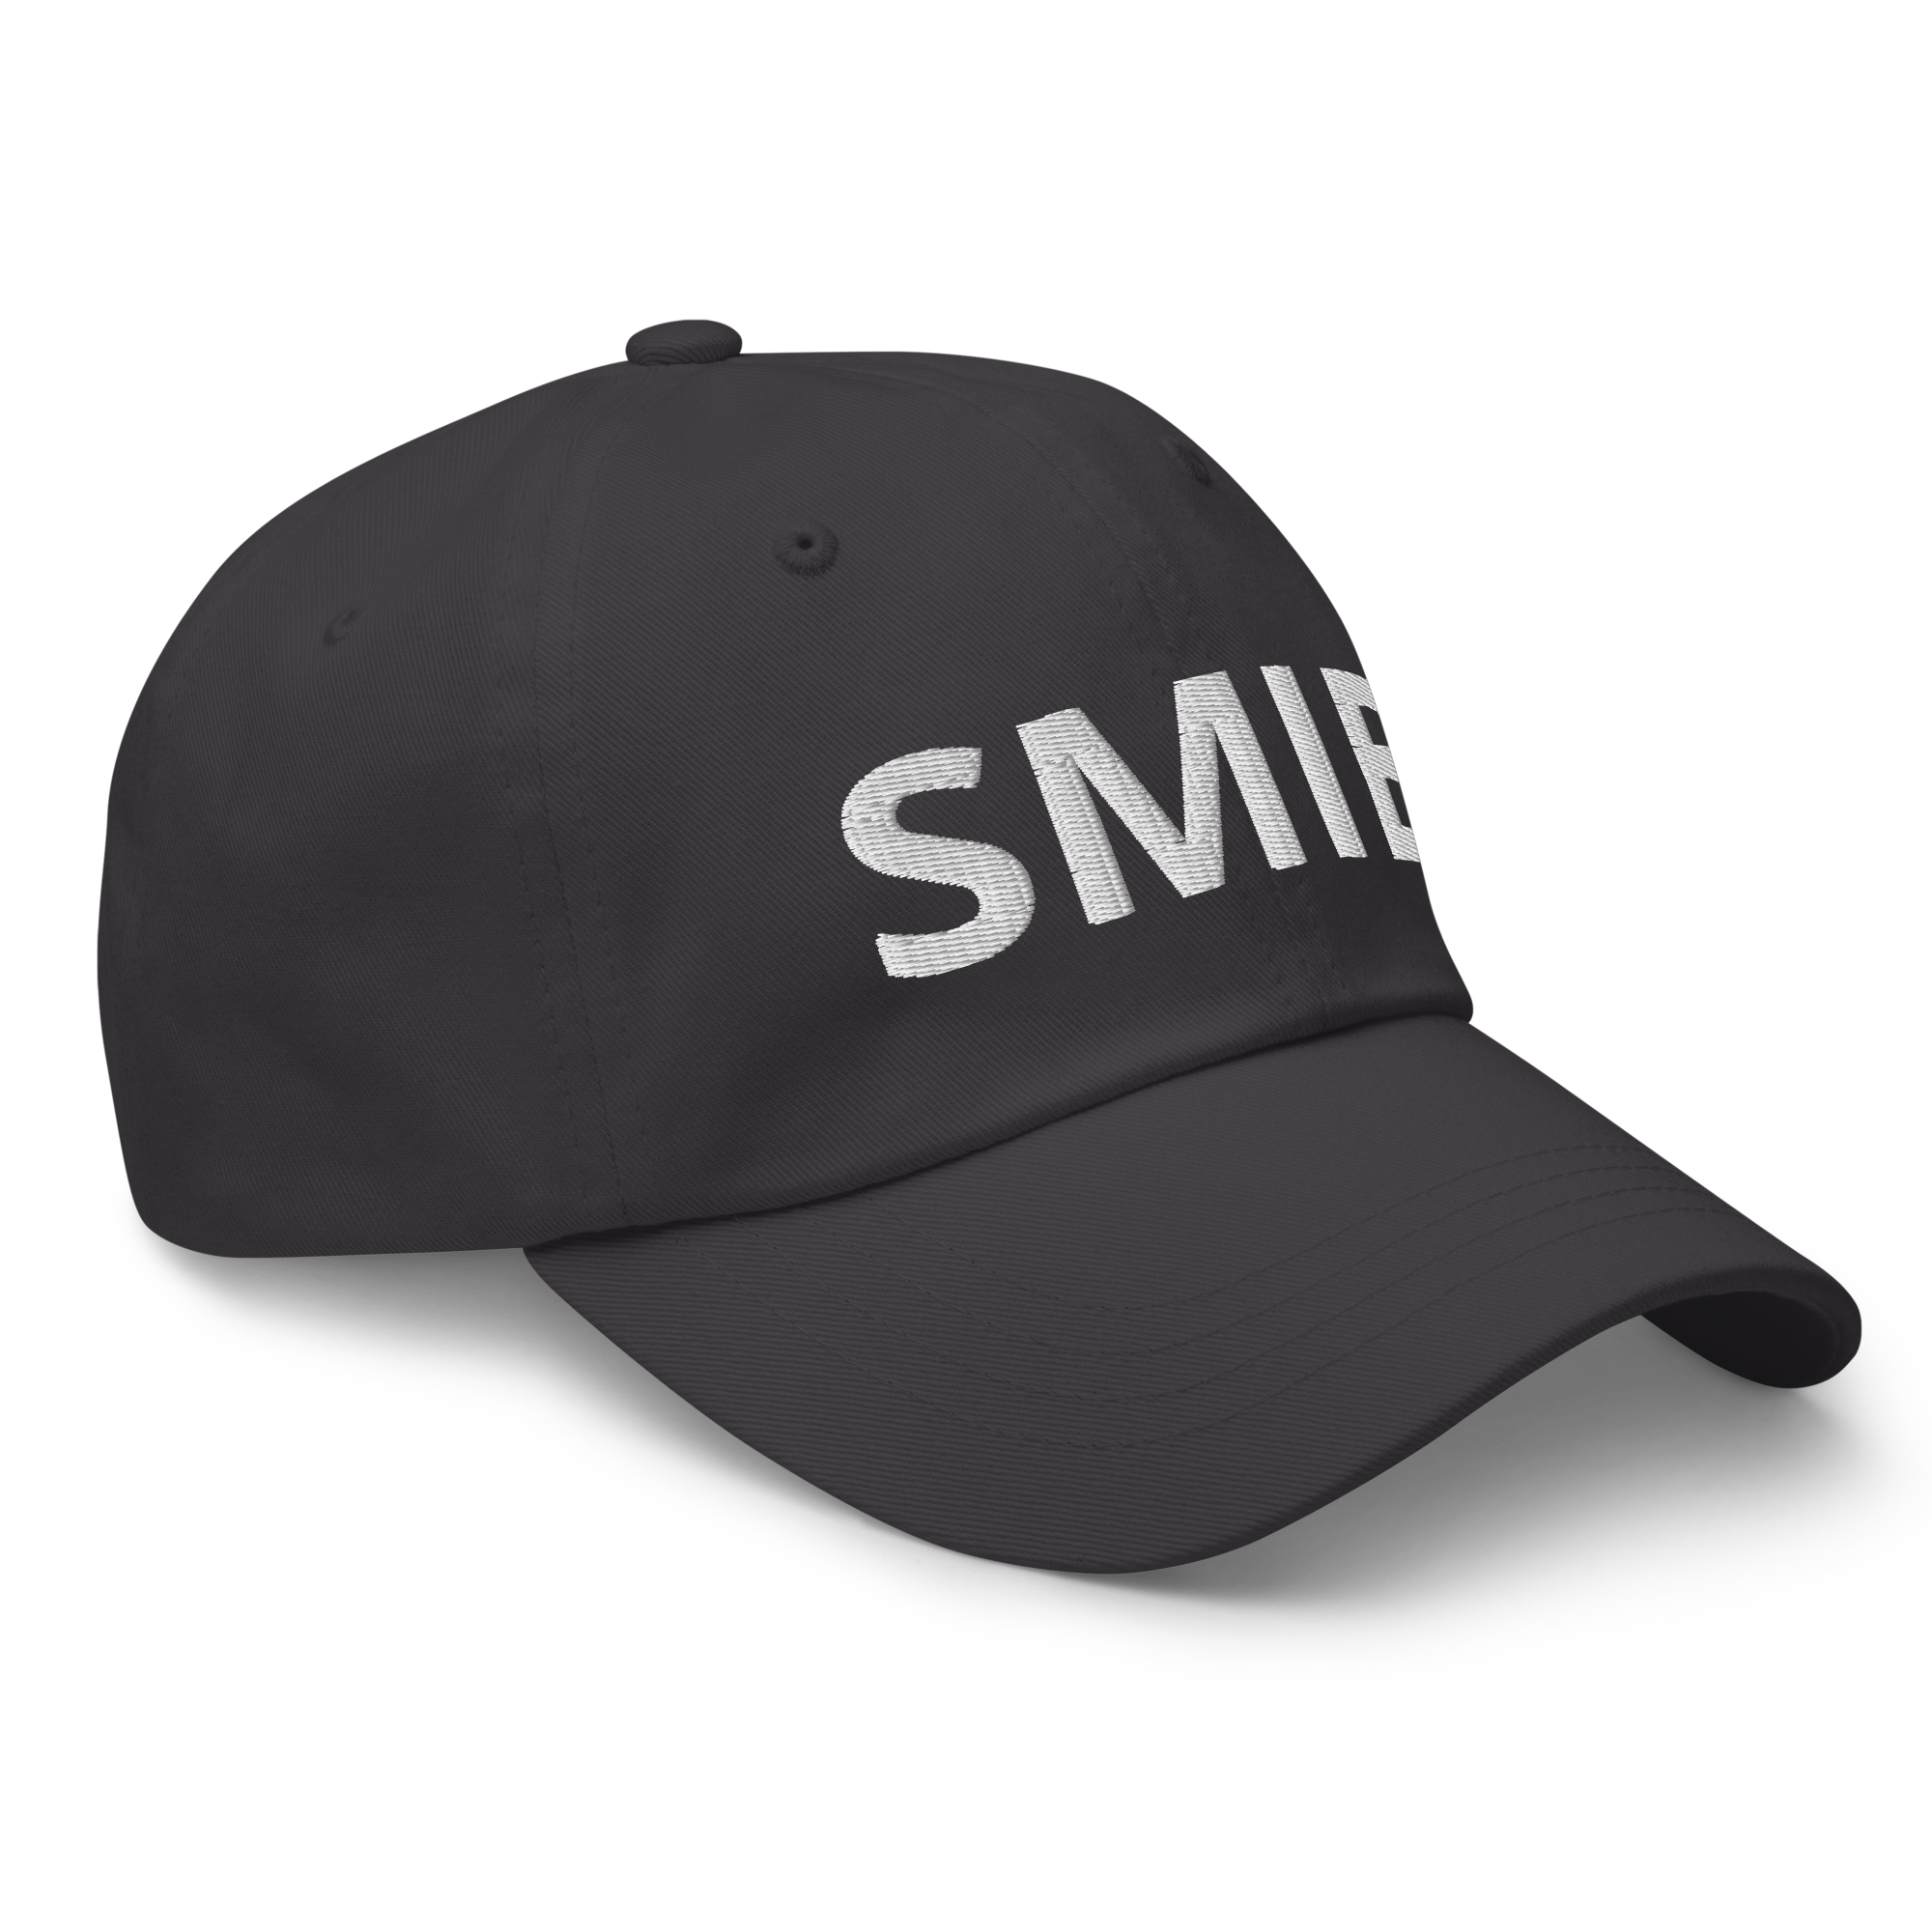 SMIB Classic Dad hat